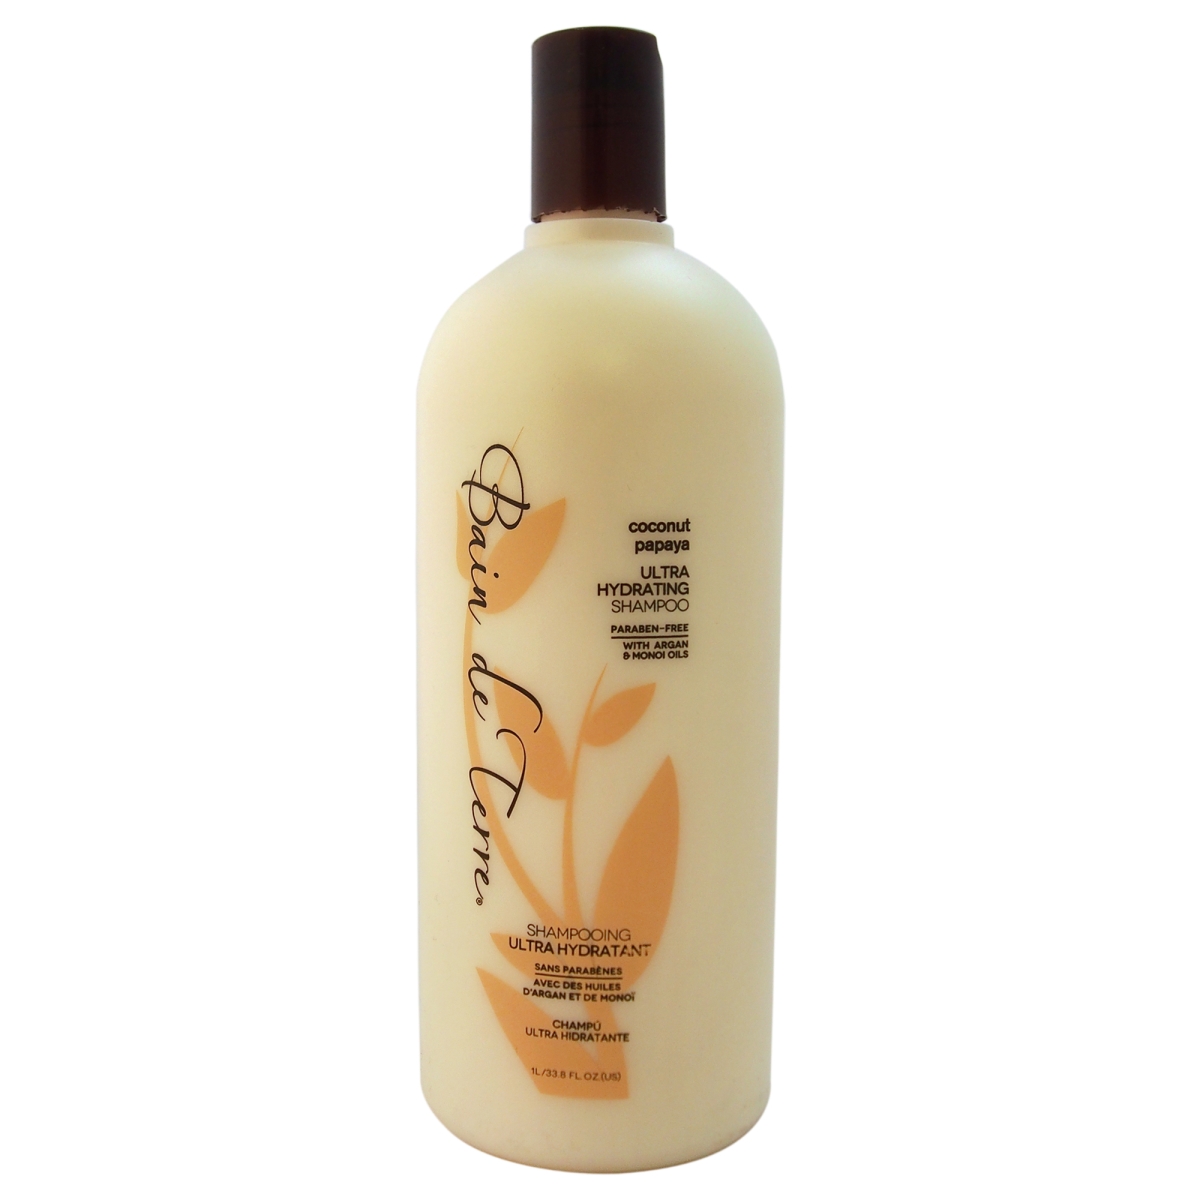 U-hc-9313 33.8 Oz Unisex Coconut Papaya Ultra Hydrating Shampoo